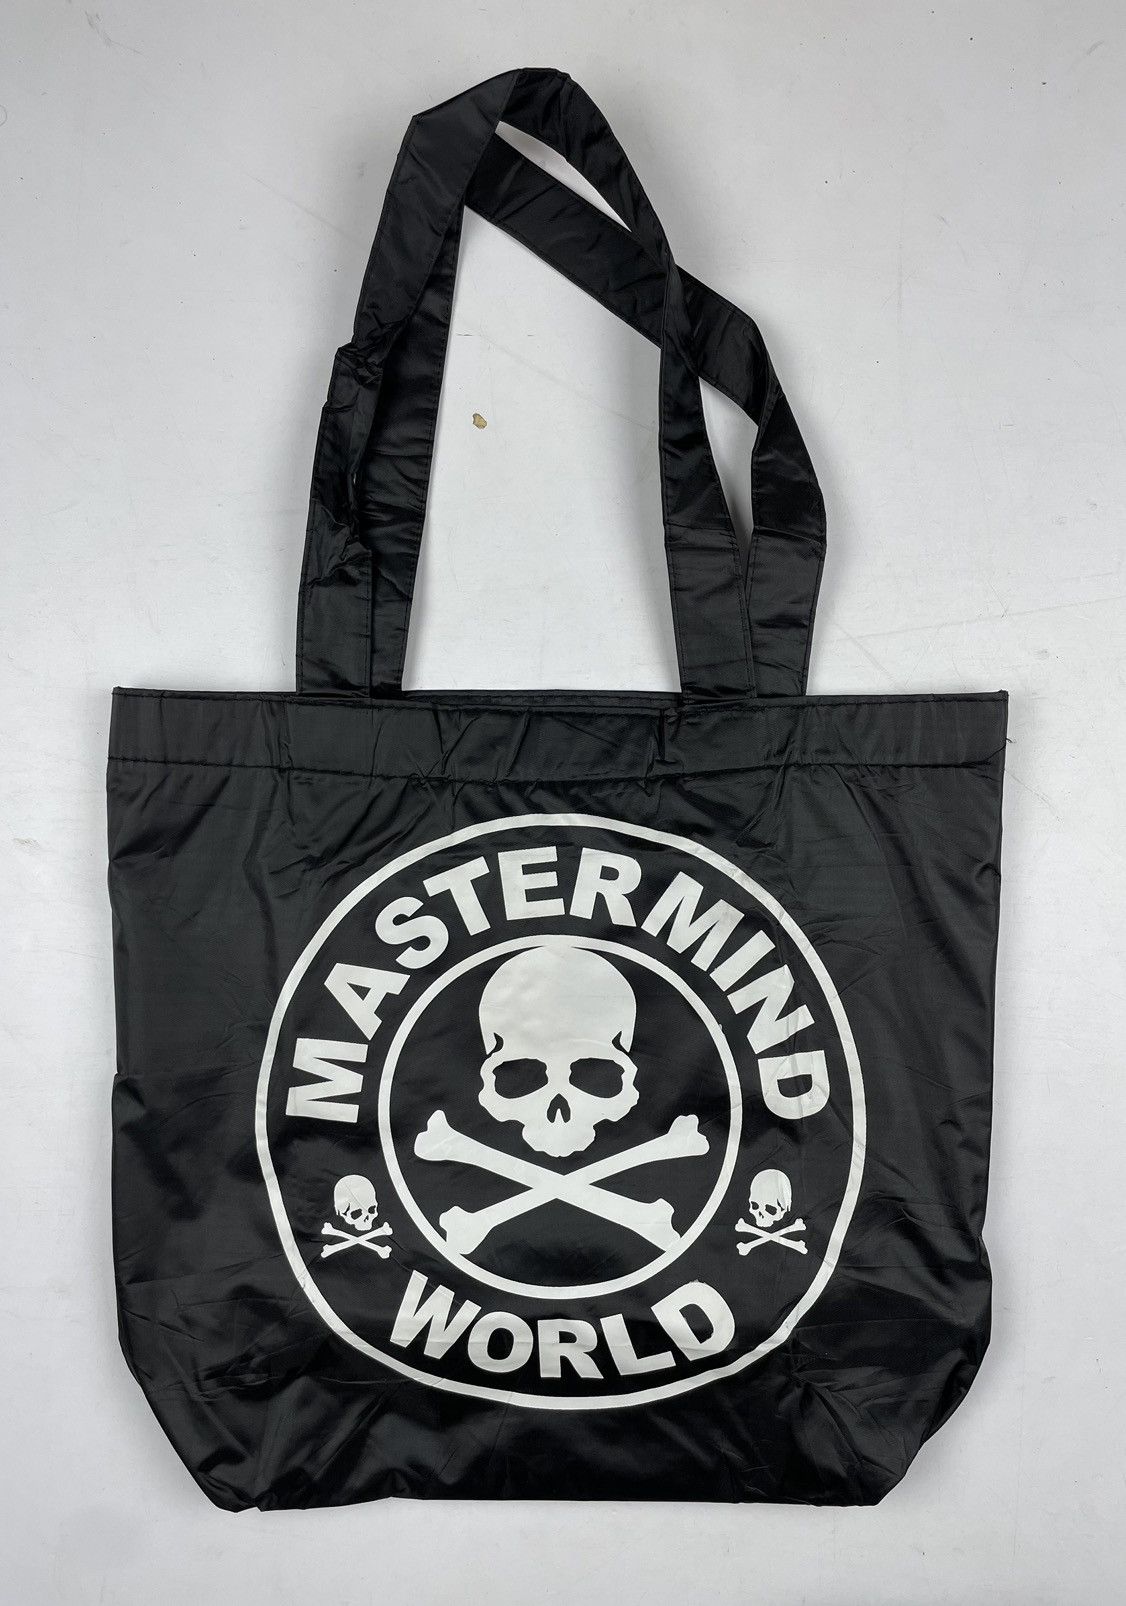 mastermind world tote bag tg3 - 1